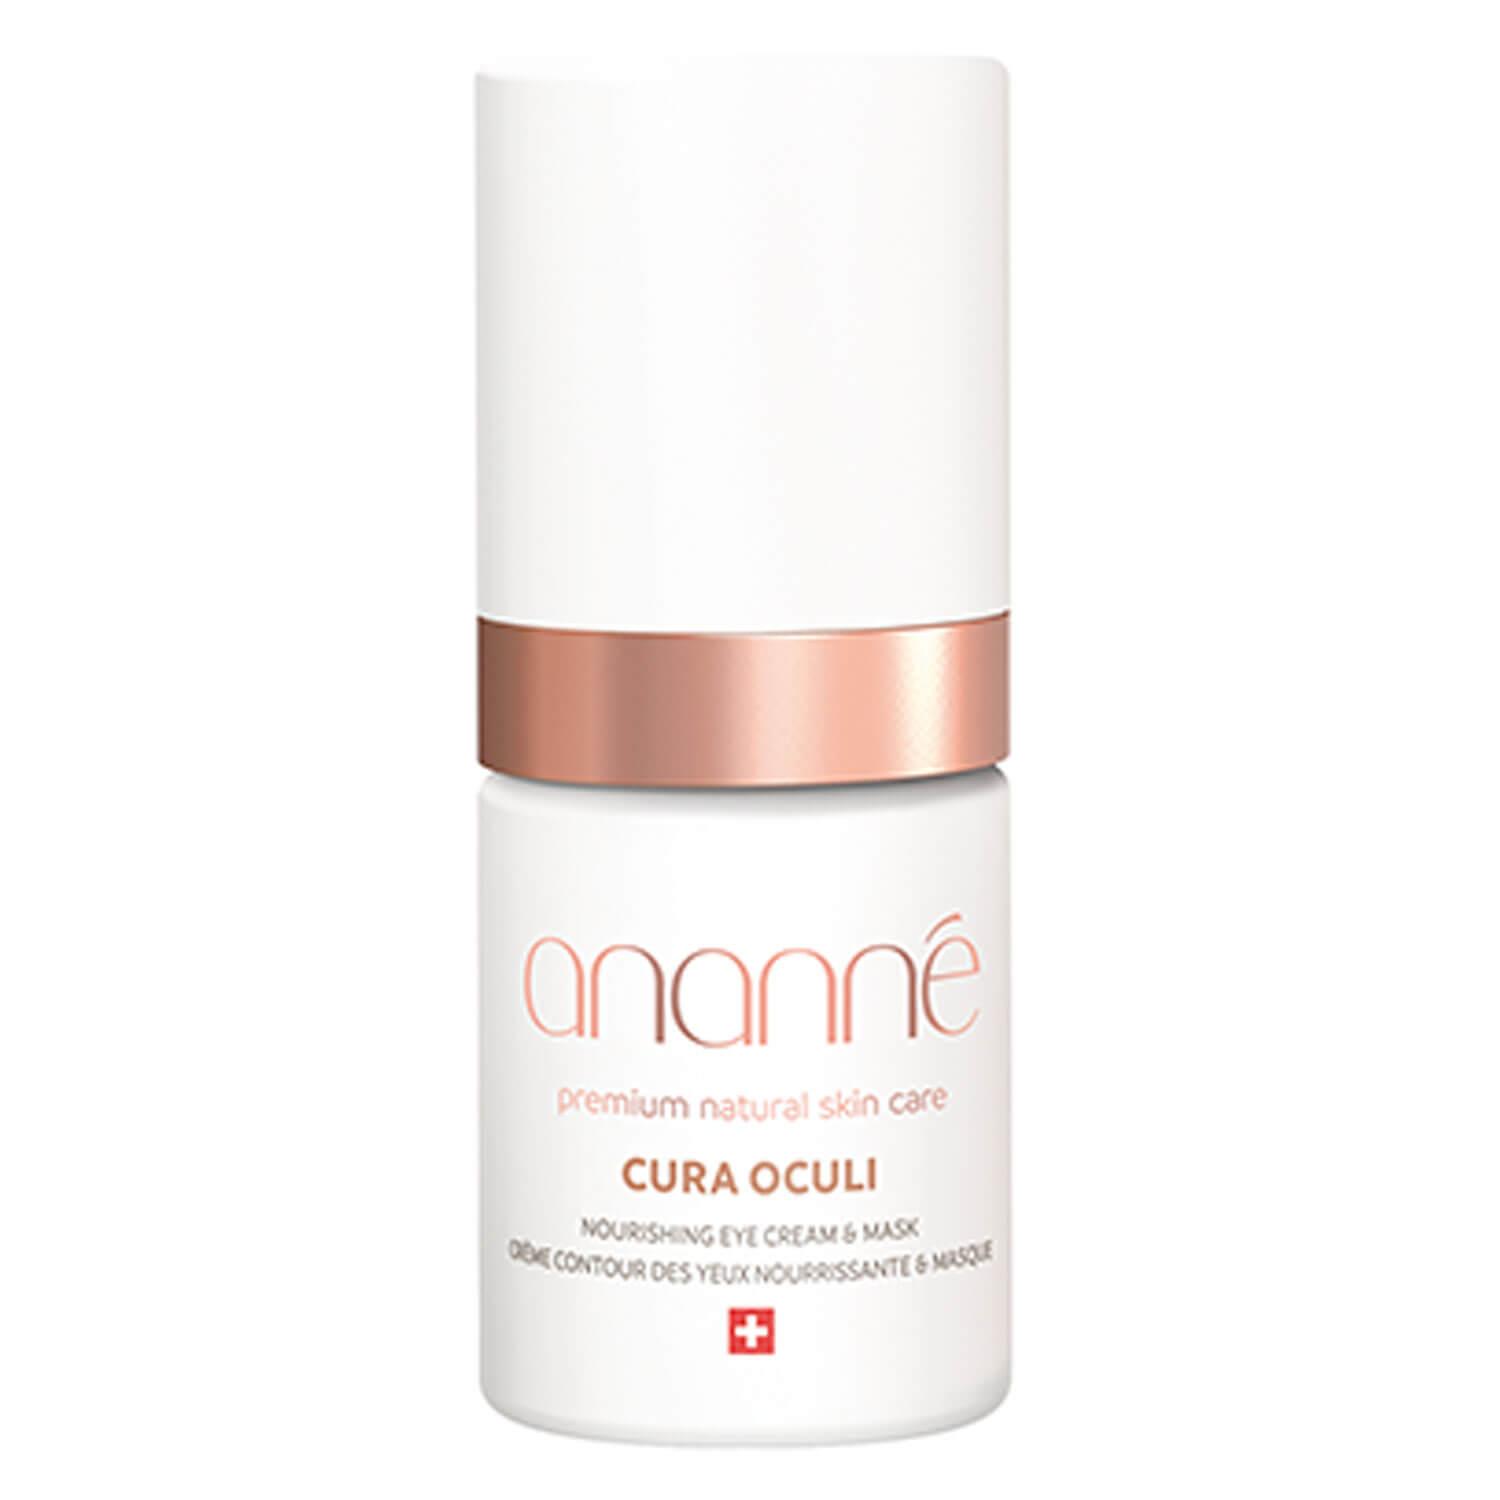 Ananné - Cura Oculi Nourishing Eye Cream & Mask